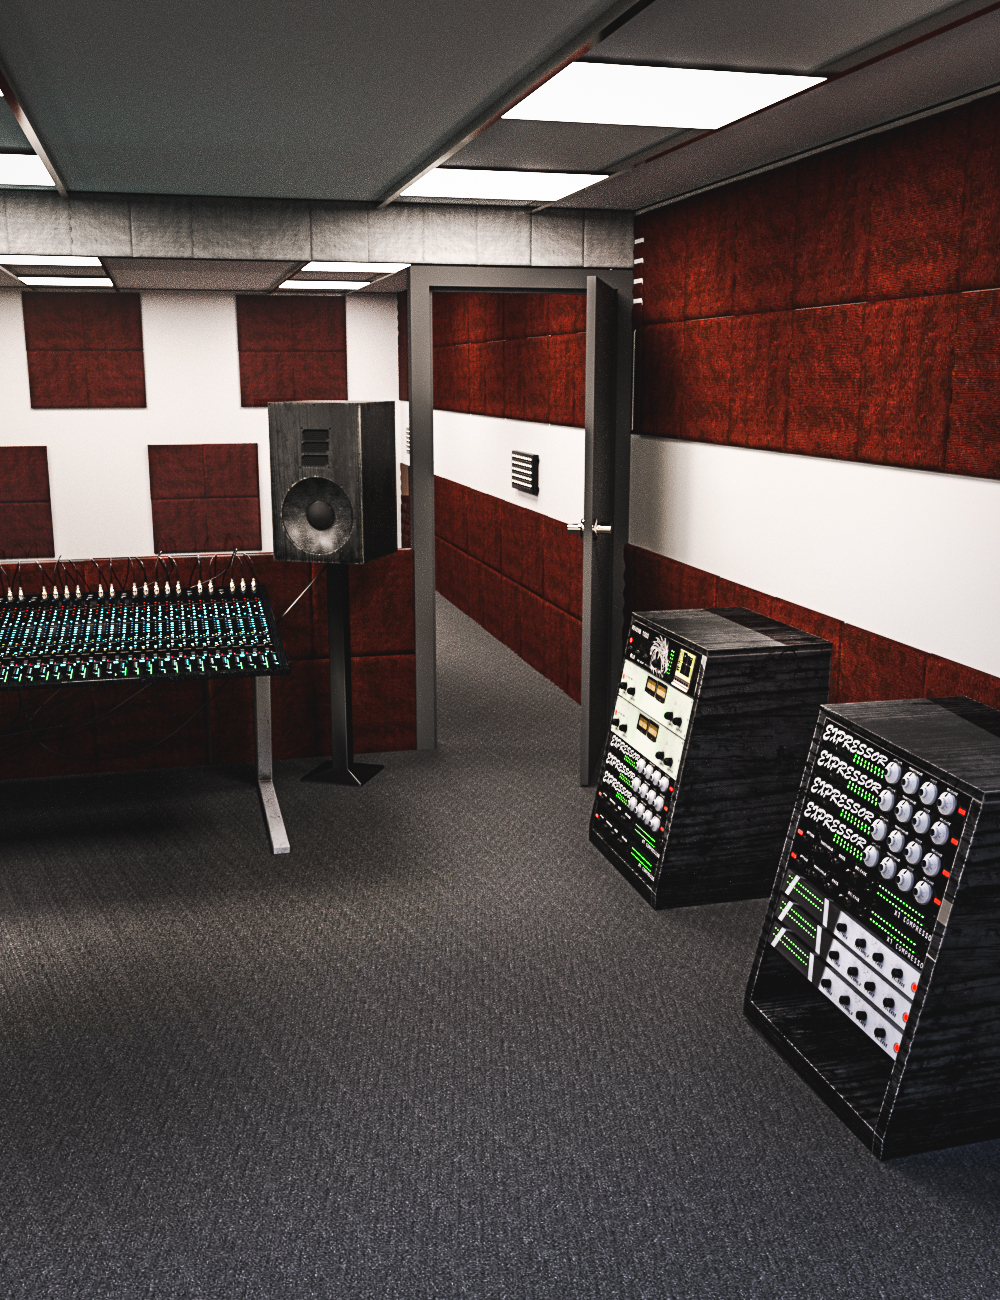 Recording Studio by: Serum, 3D Models by Daz 3D